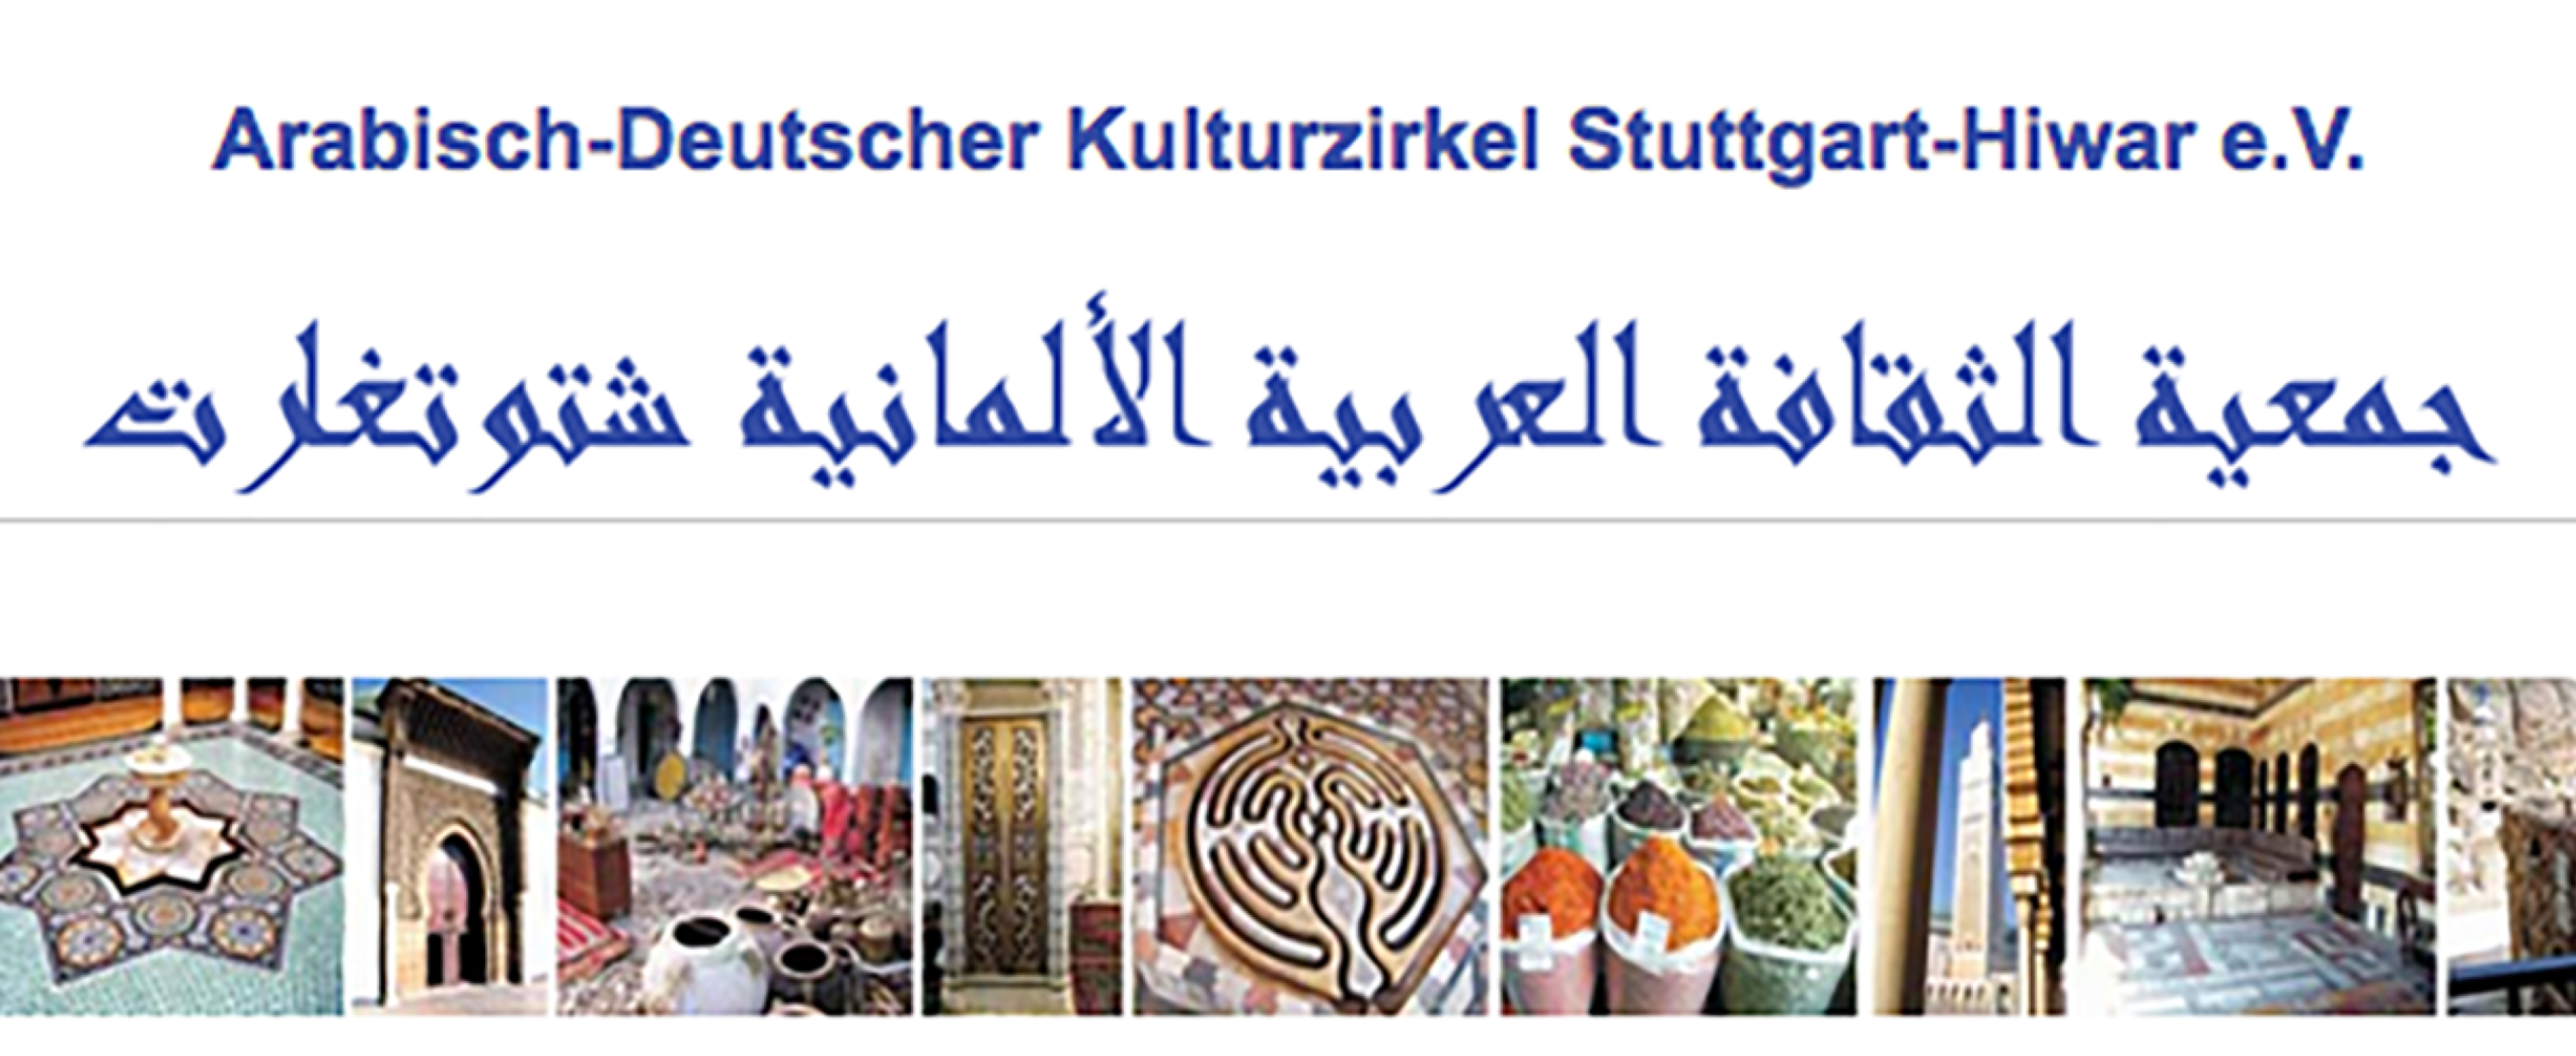 Arabisch-Deutscher Kulturzirkel Stuttgart